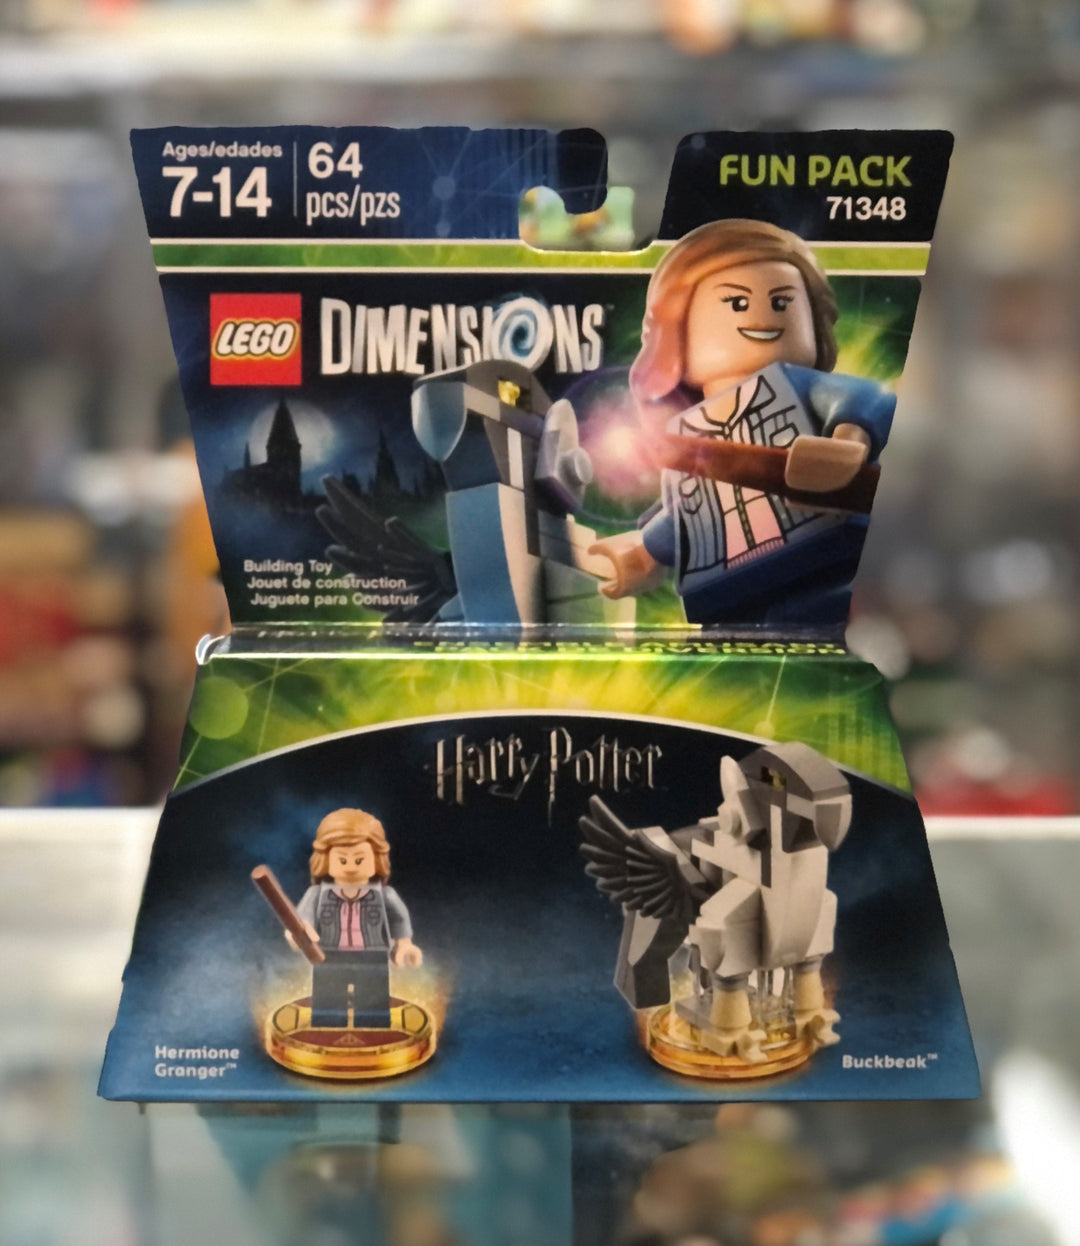 Fun Pack - Harry Potter (Hermione Granger and Buckbeak), 71348